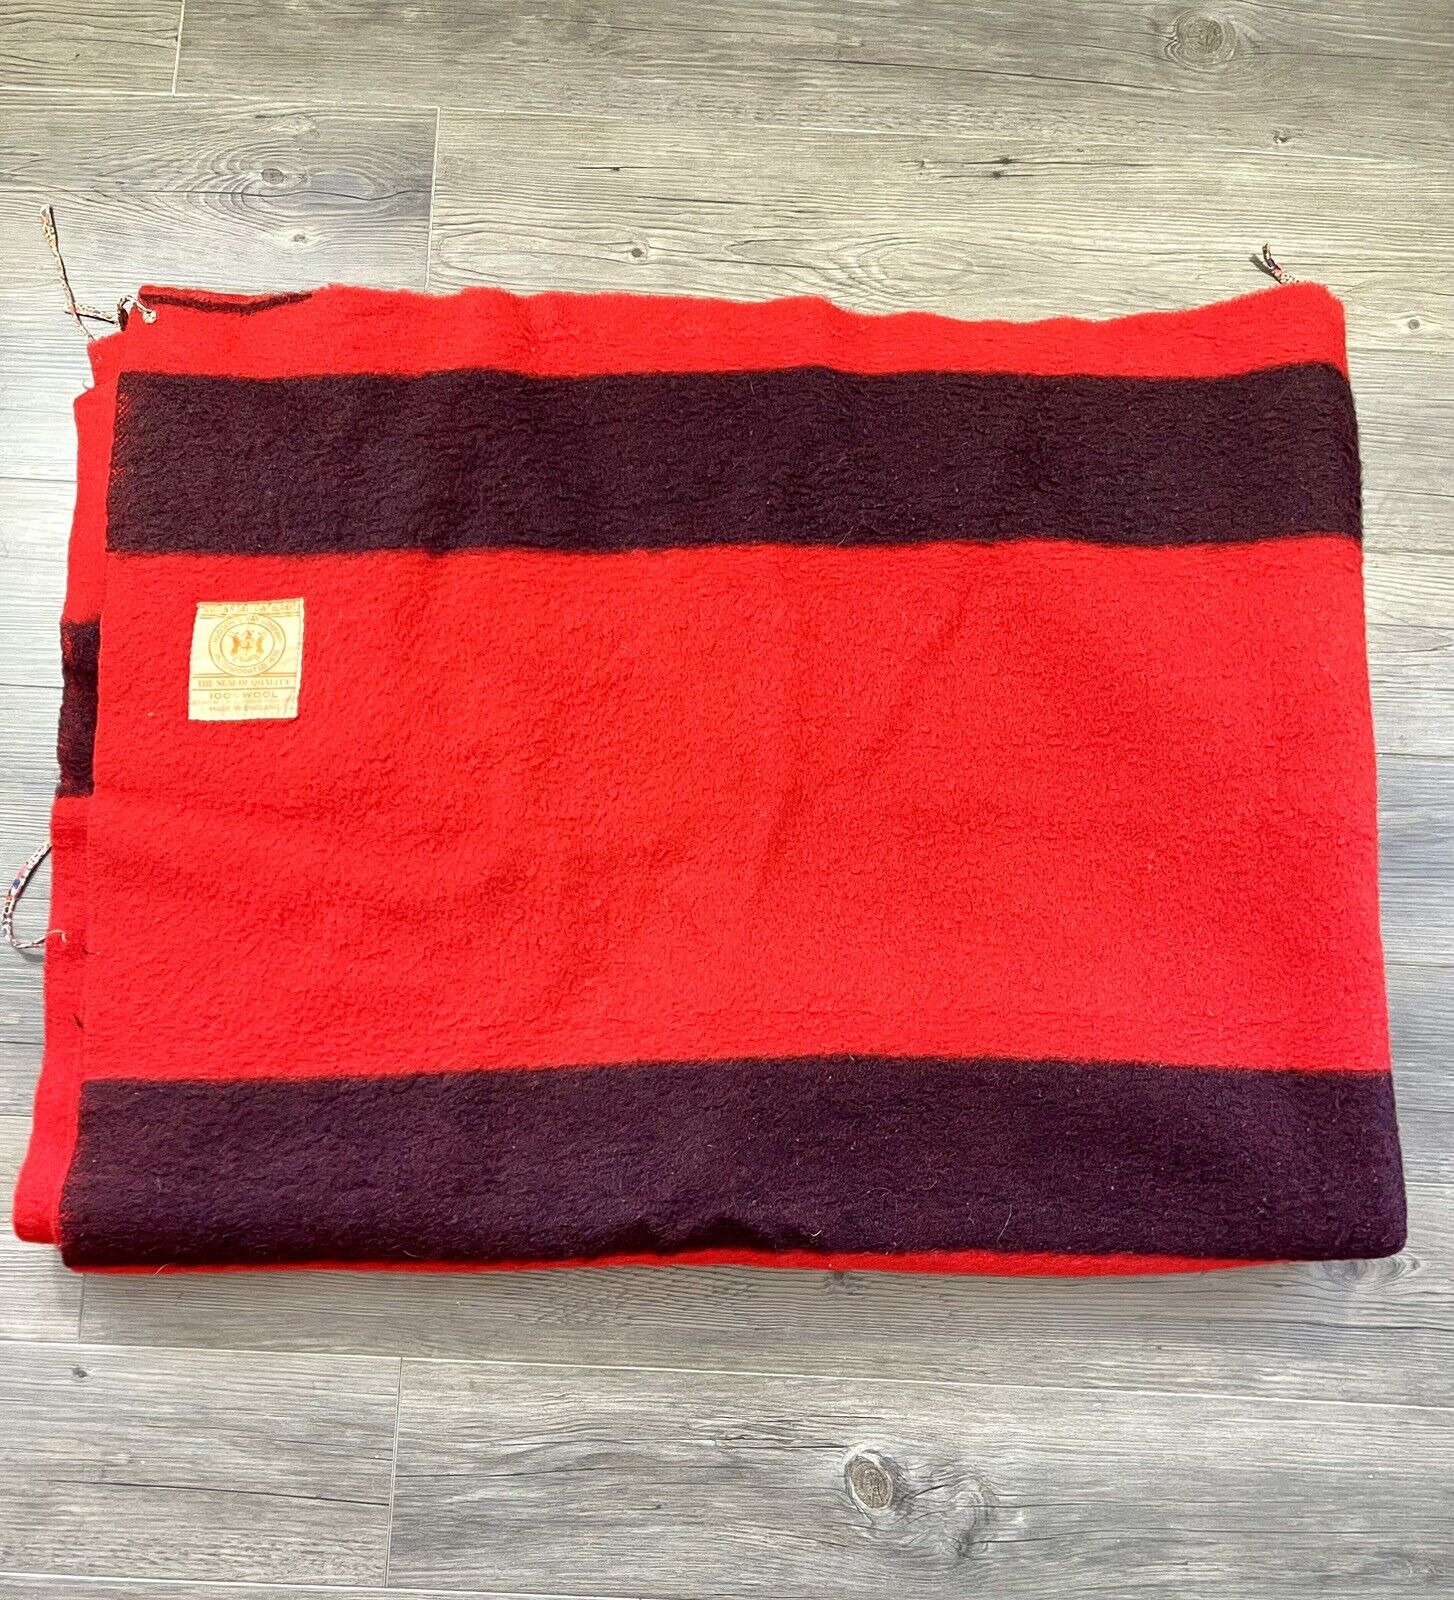 Vtg Hudson's Bay 100% Wool Blanket England 4 Point 102x70 King Red Black Stripe